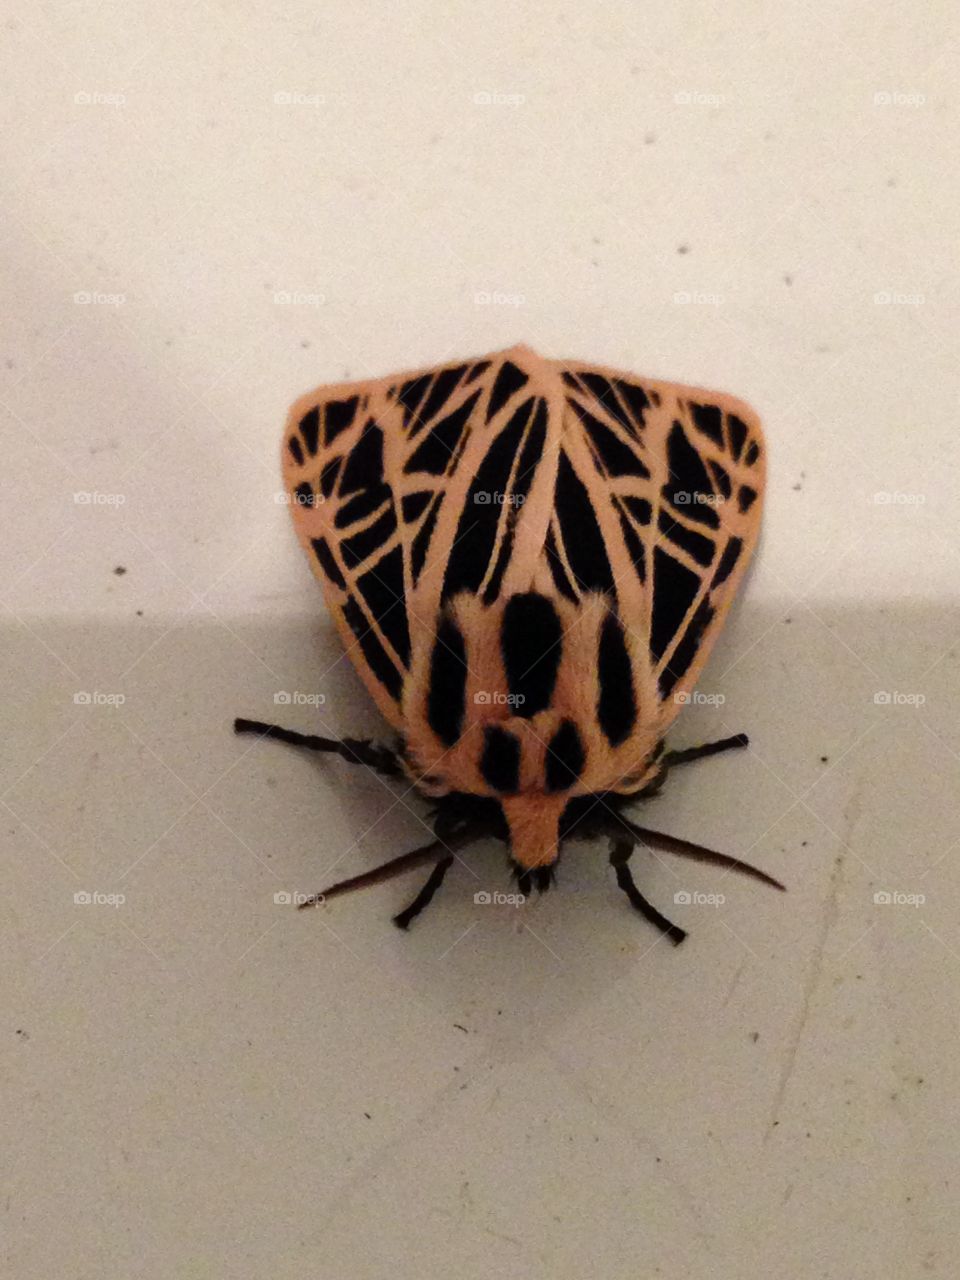 Neat moth